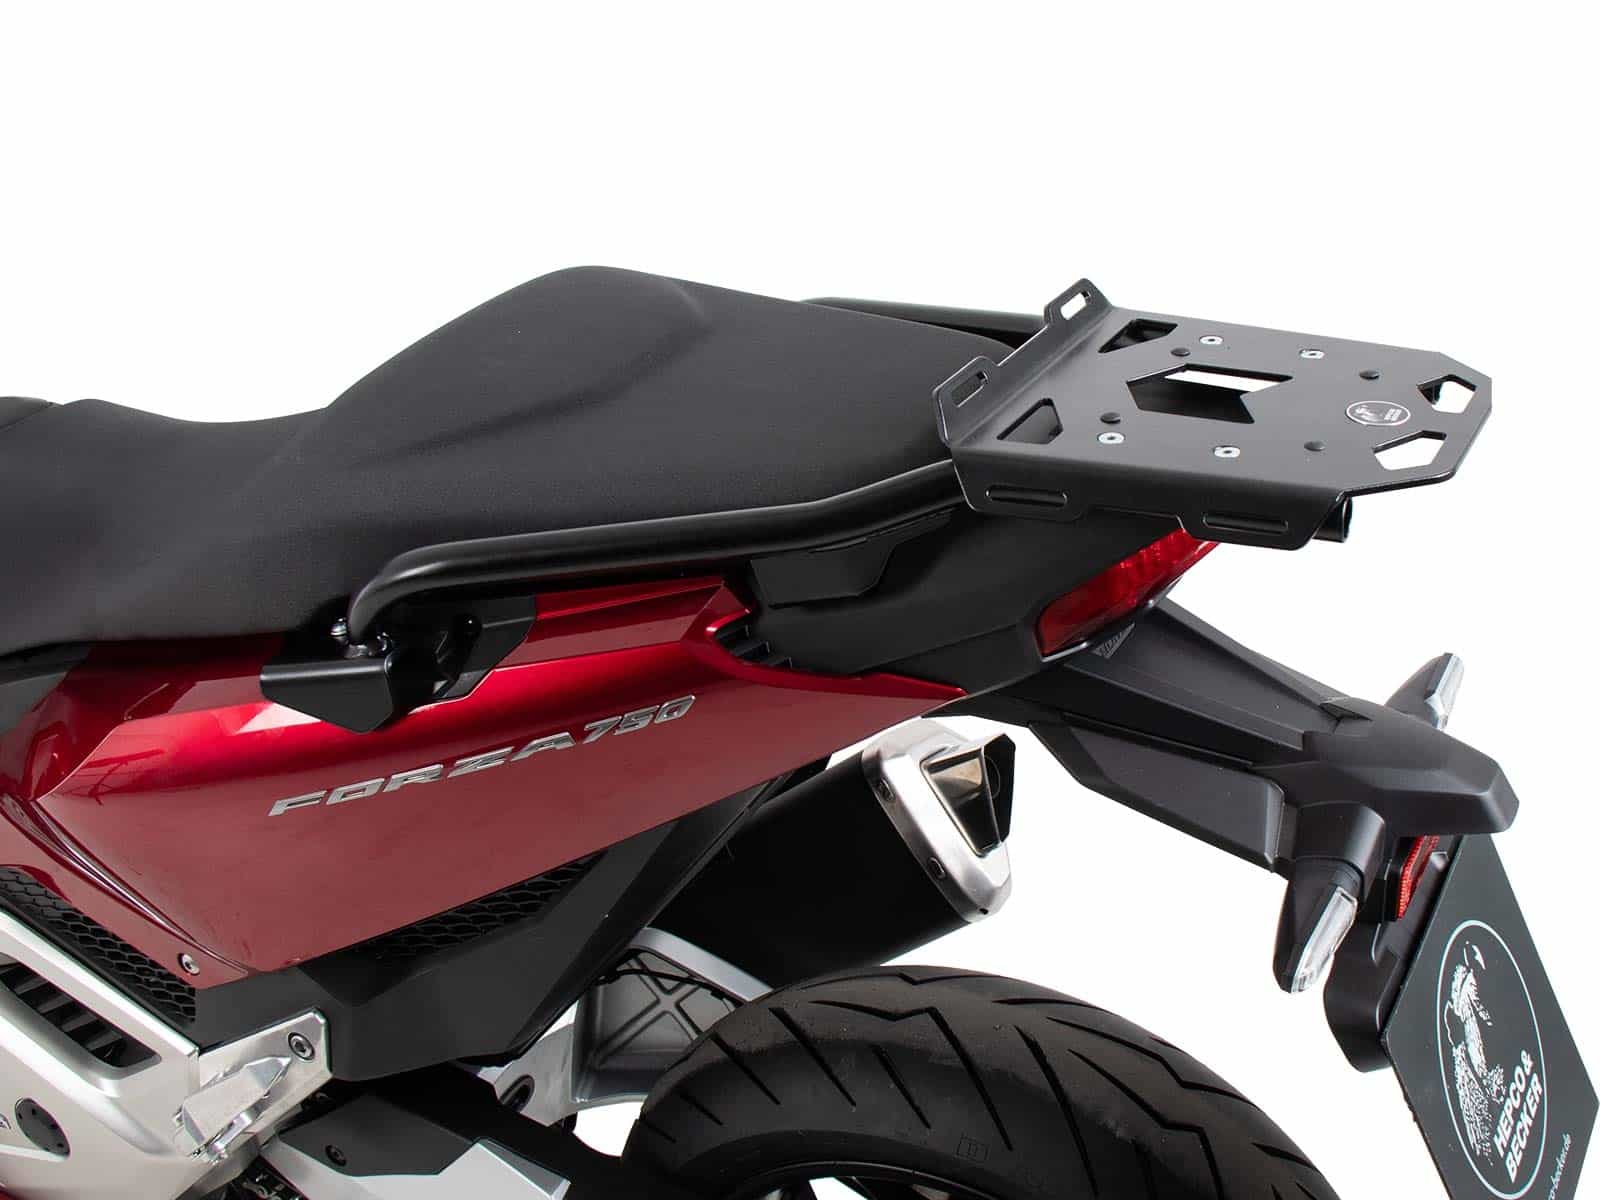 Minirack soft luggage rear rack for Honda Forza (2021-)